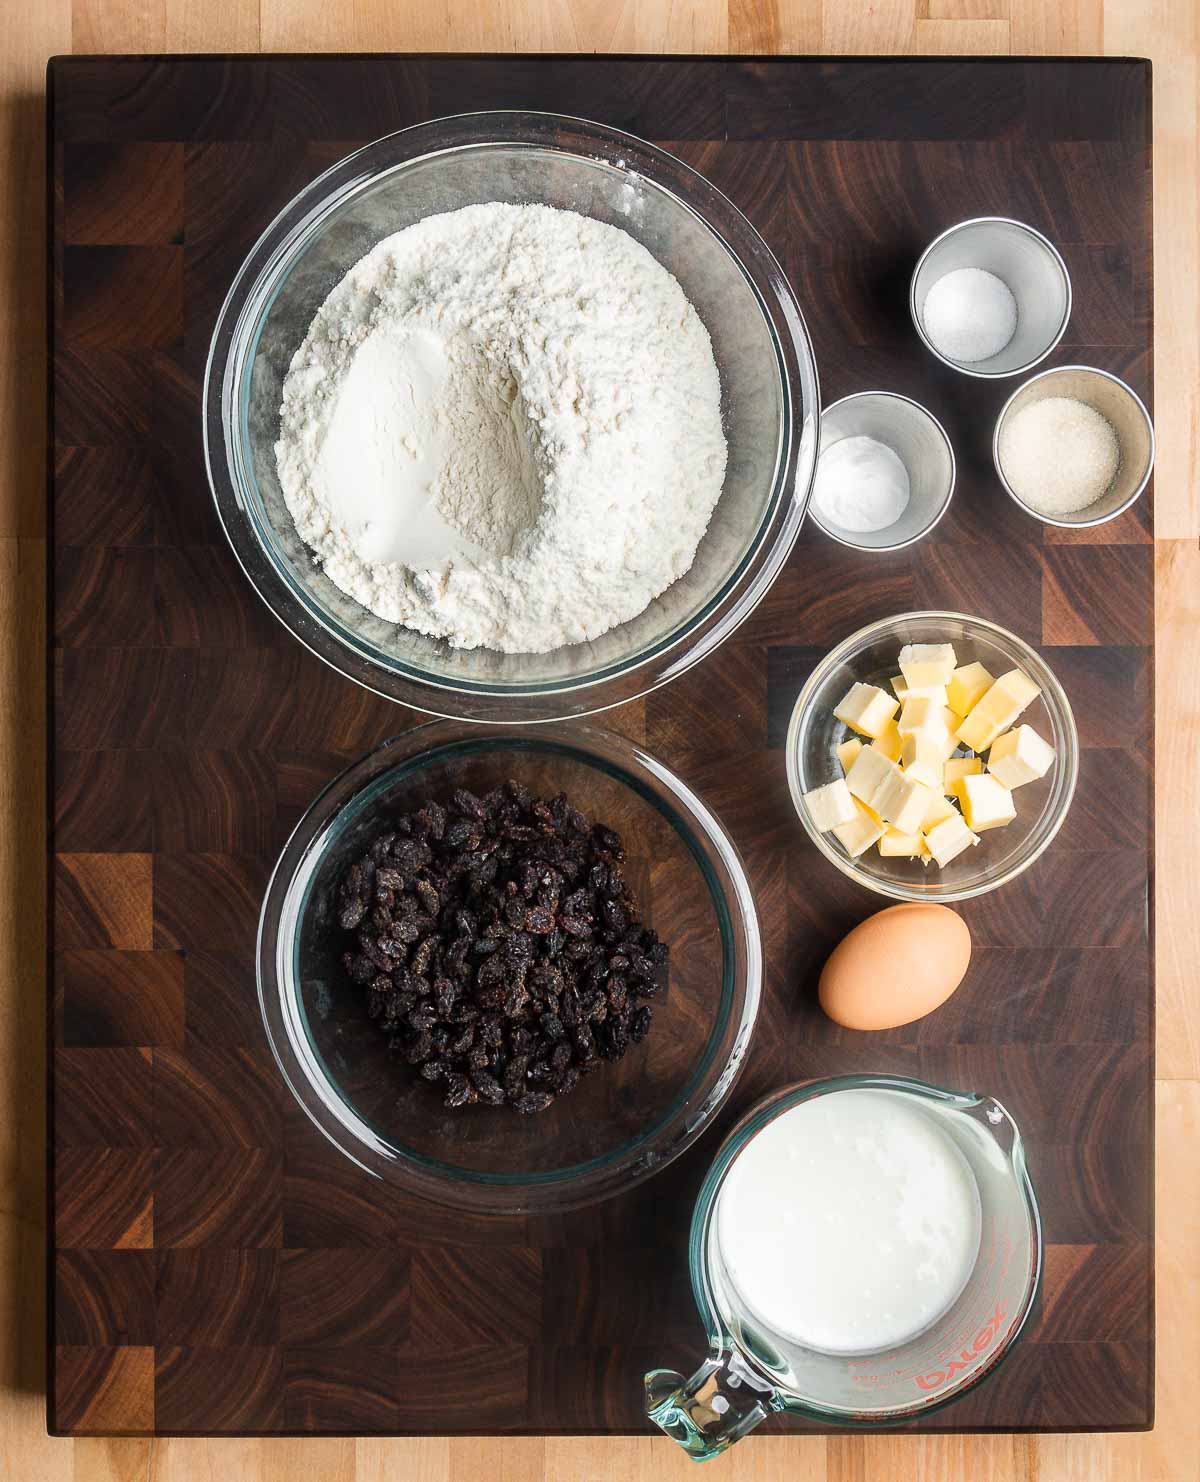 Ingredients shown: flour, sugar, baking soda, baking powder, salt, butter, buttermilk, egg, and raisins.